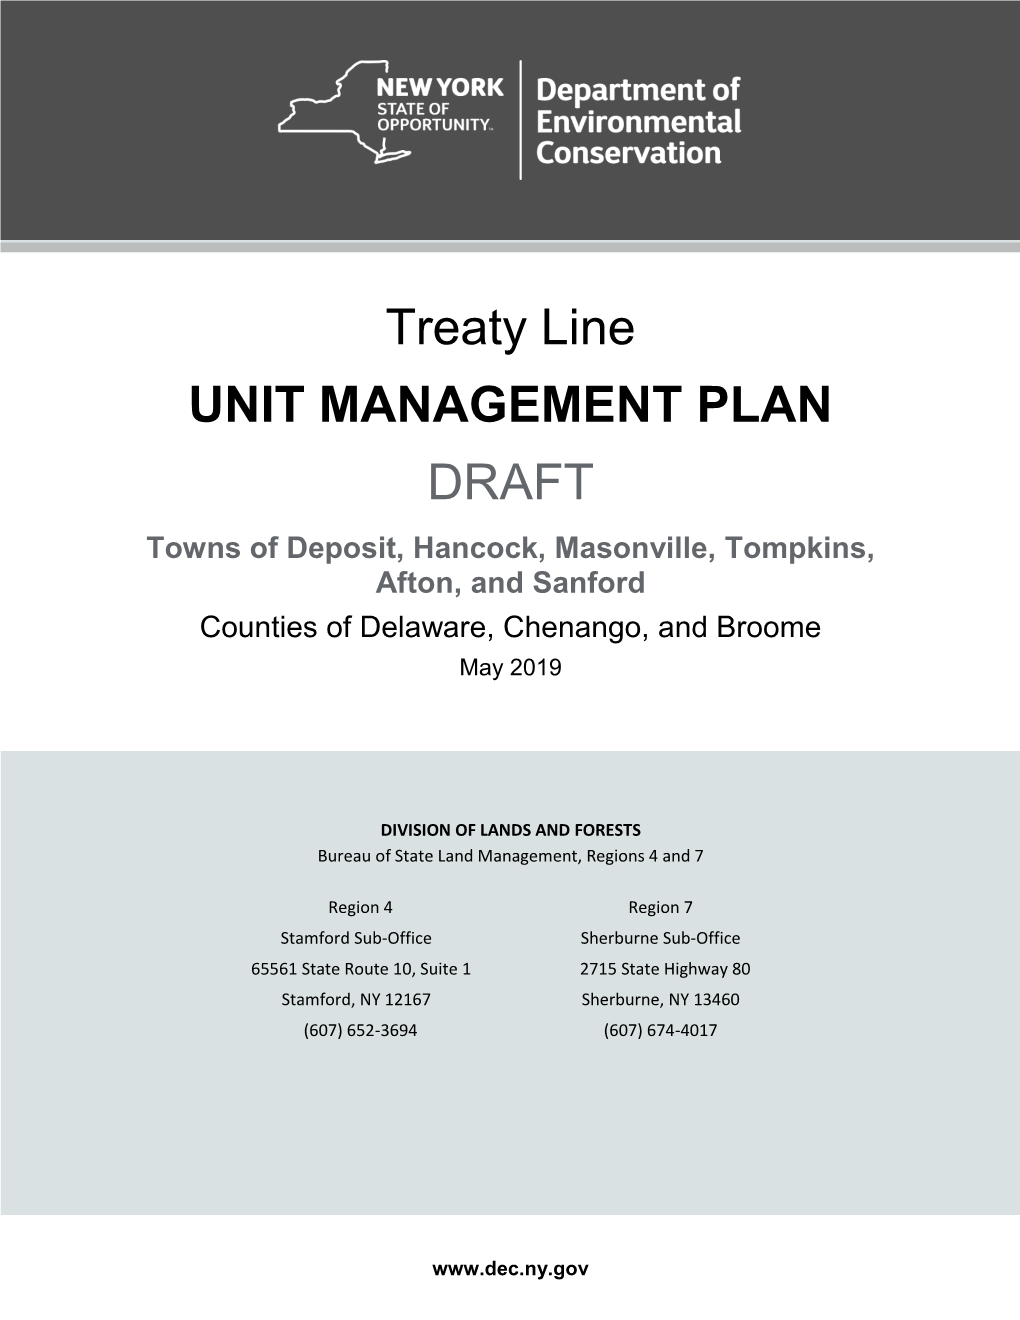 Treaty Line Draft Unit Management Plan